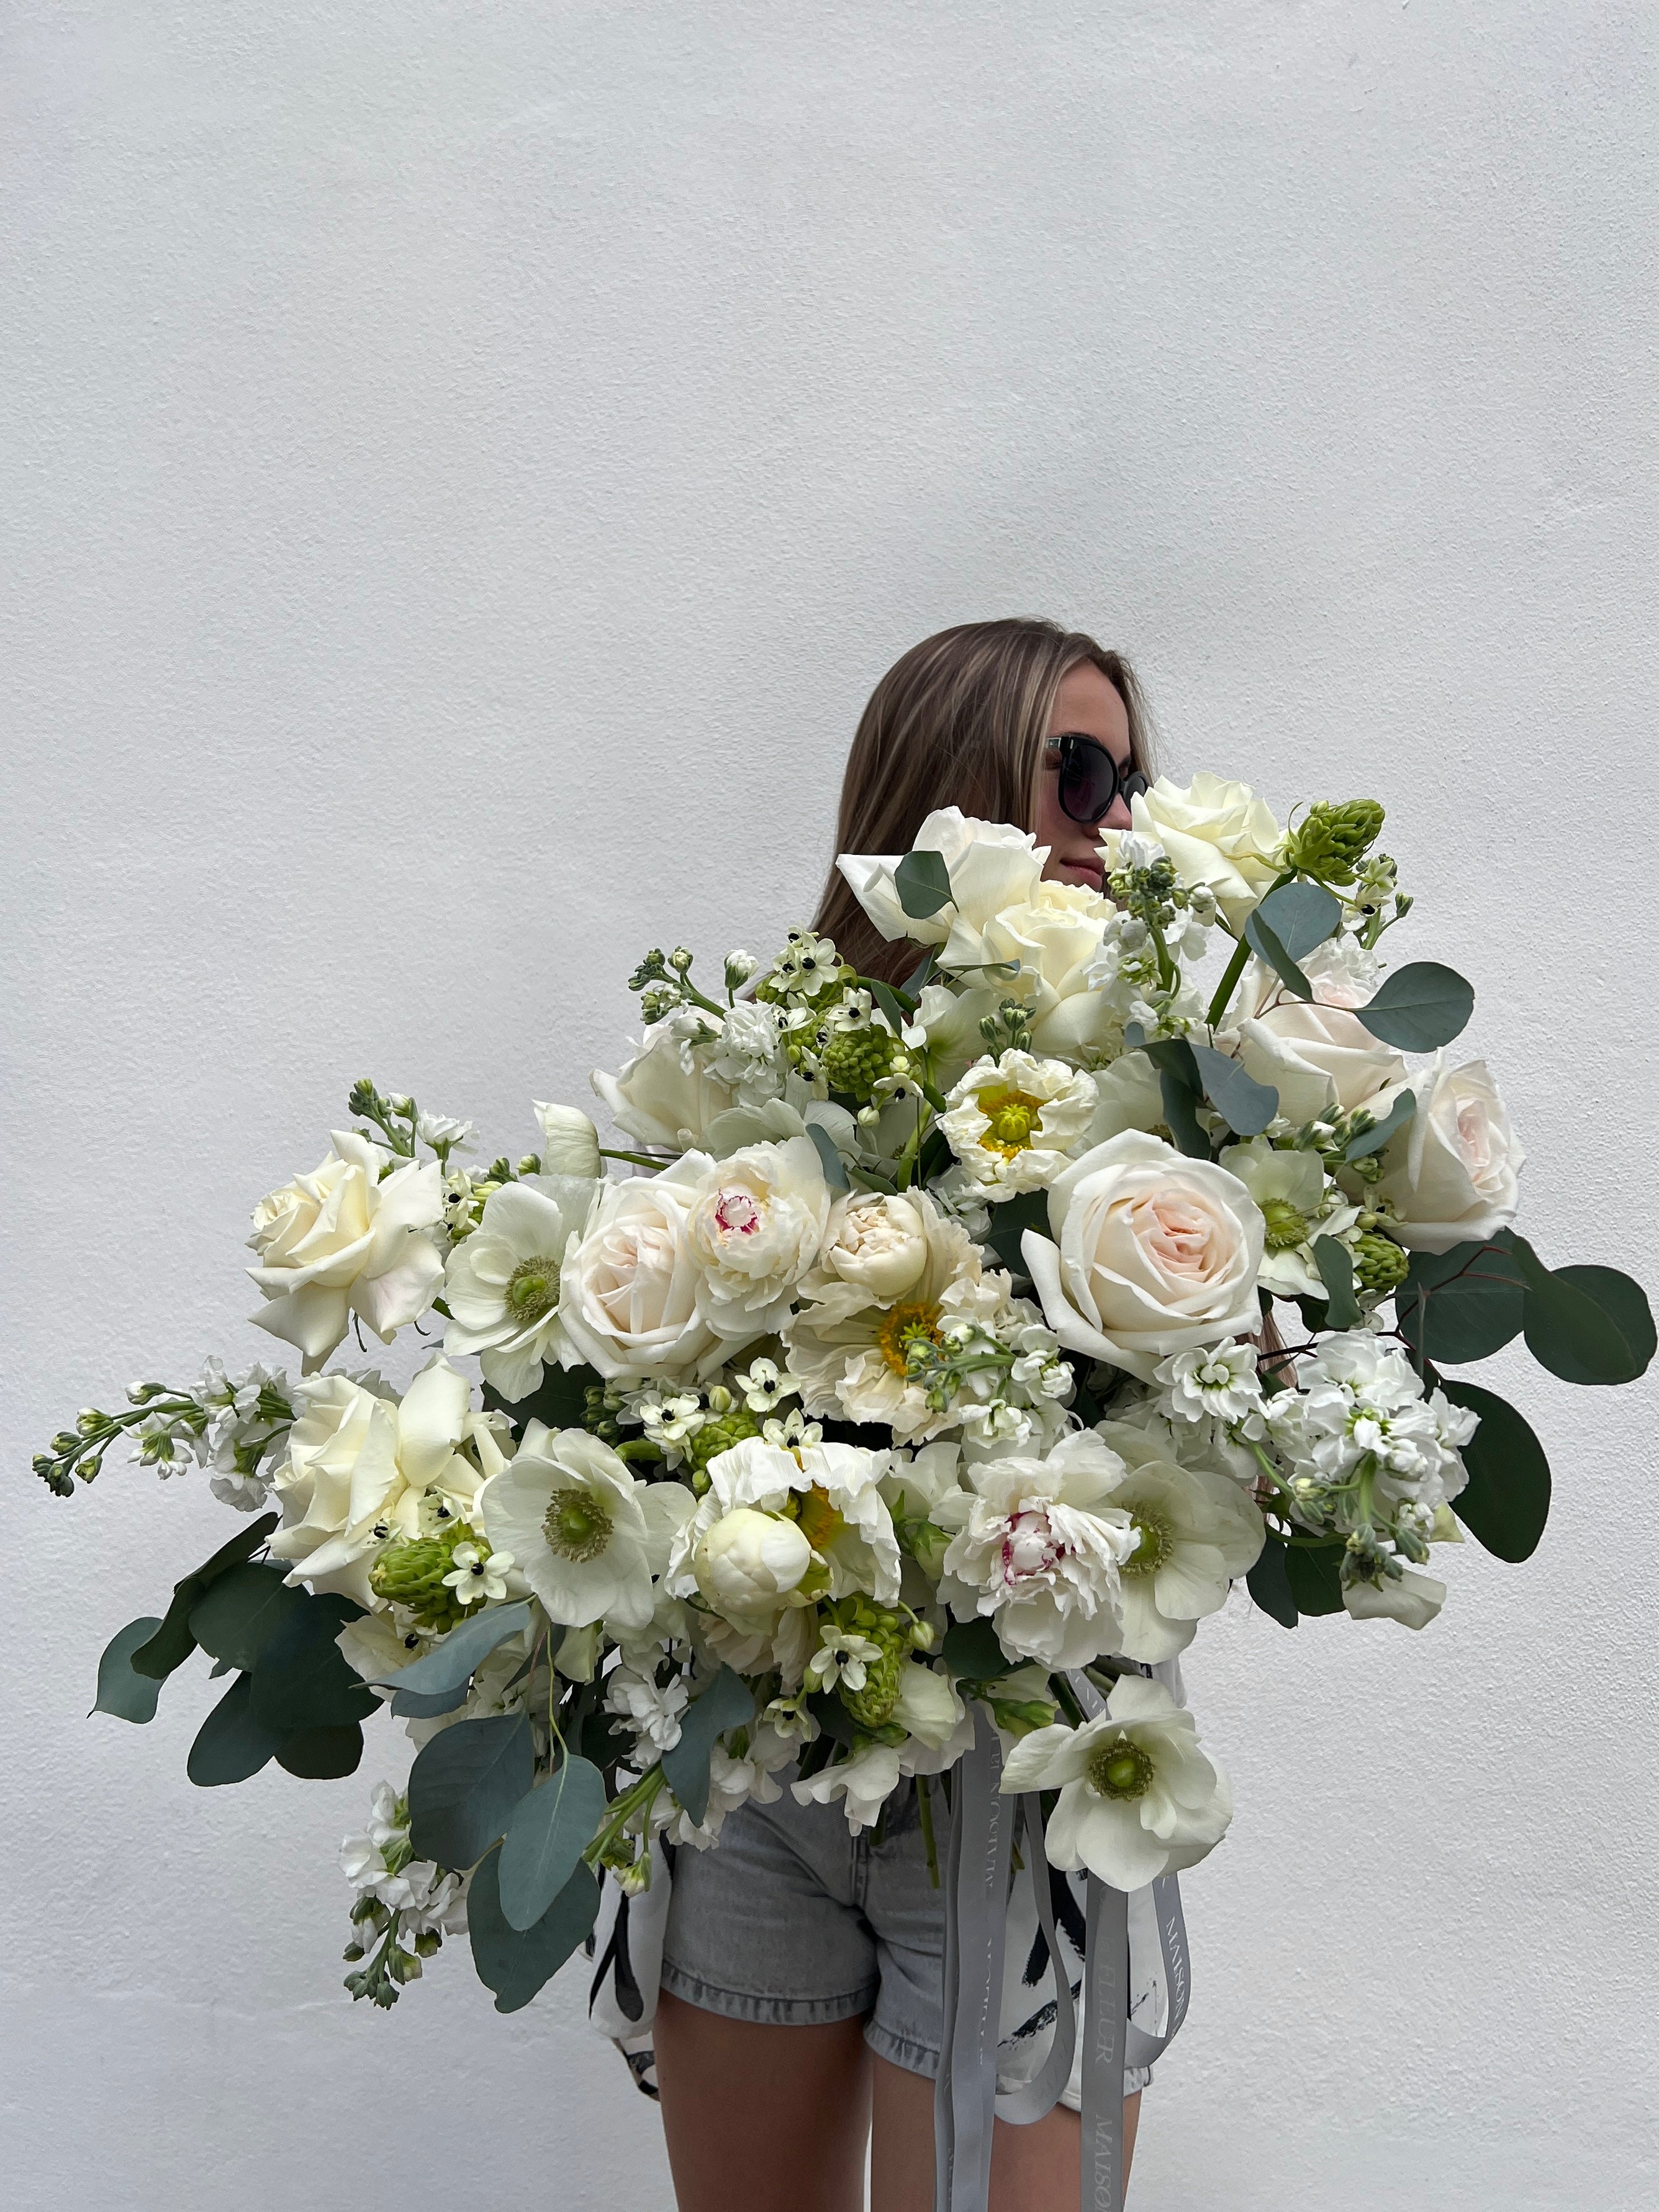 The Girl meets Green - Premium white O’Hara roses, peonies, stock flowers, anemones, puppies flowers, eucalyptus, and beautiful sweet pea flowers